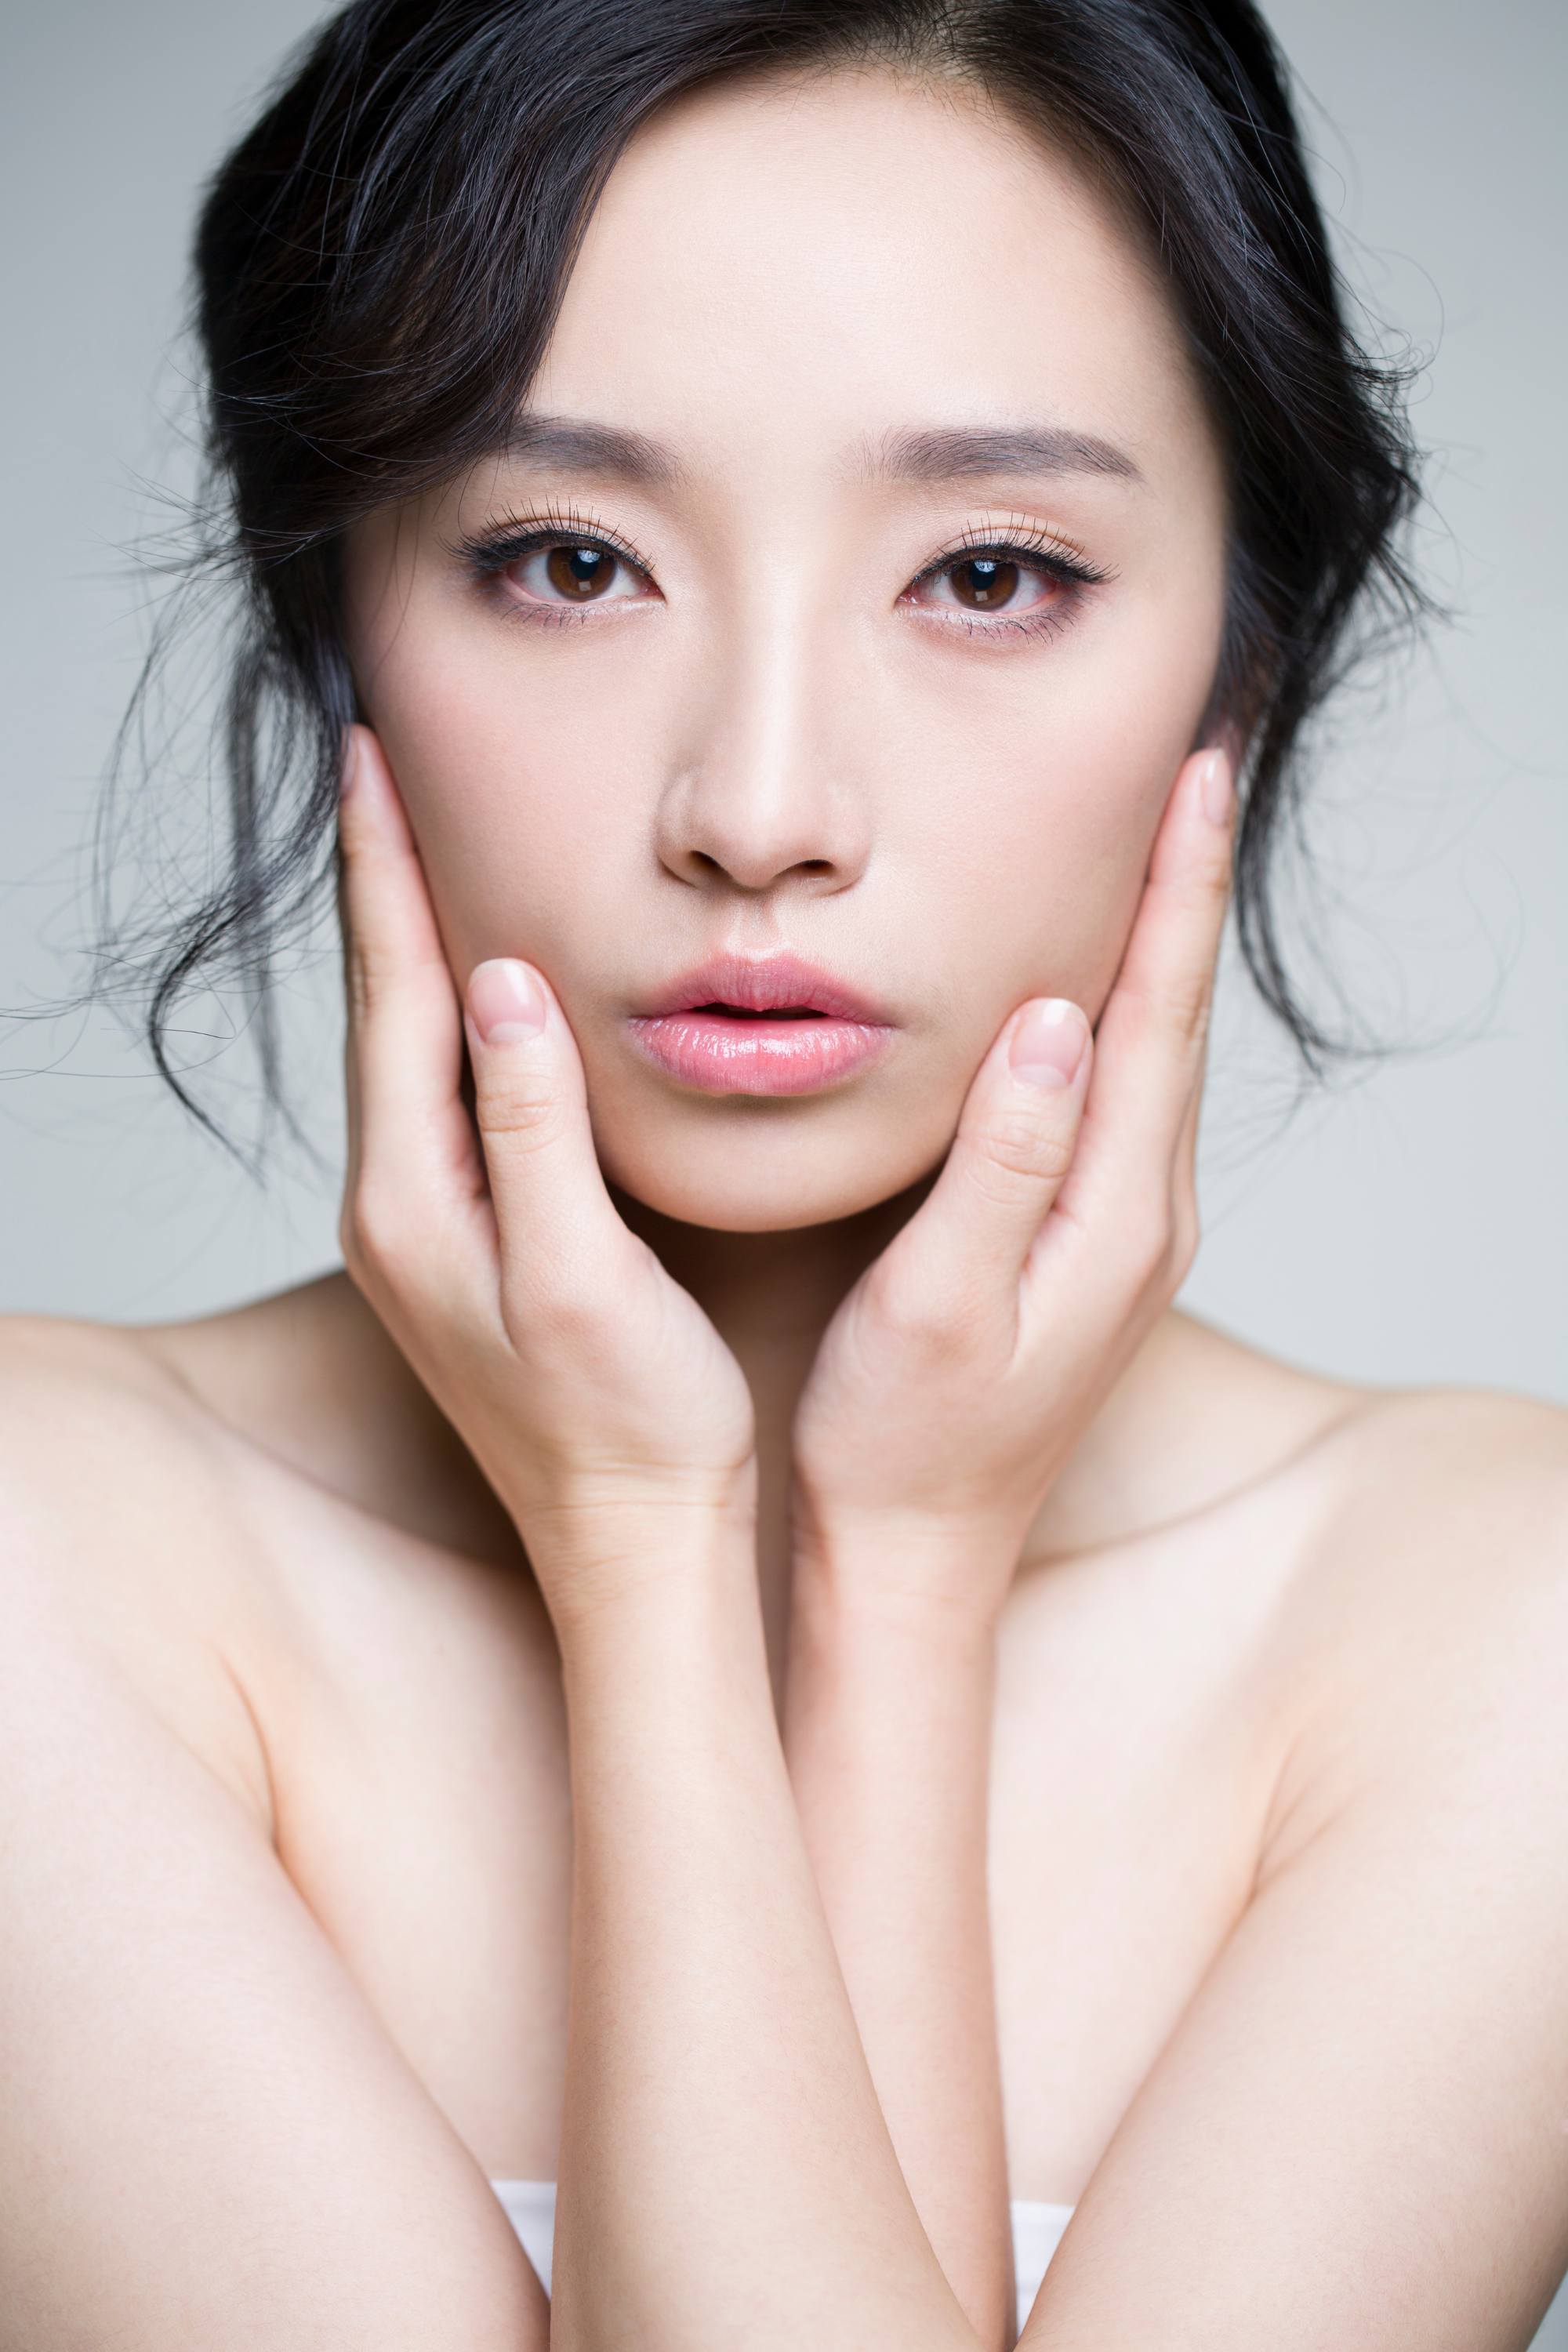 K-Beauty Secrets Revealed: The Ultimate Skincare Guide